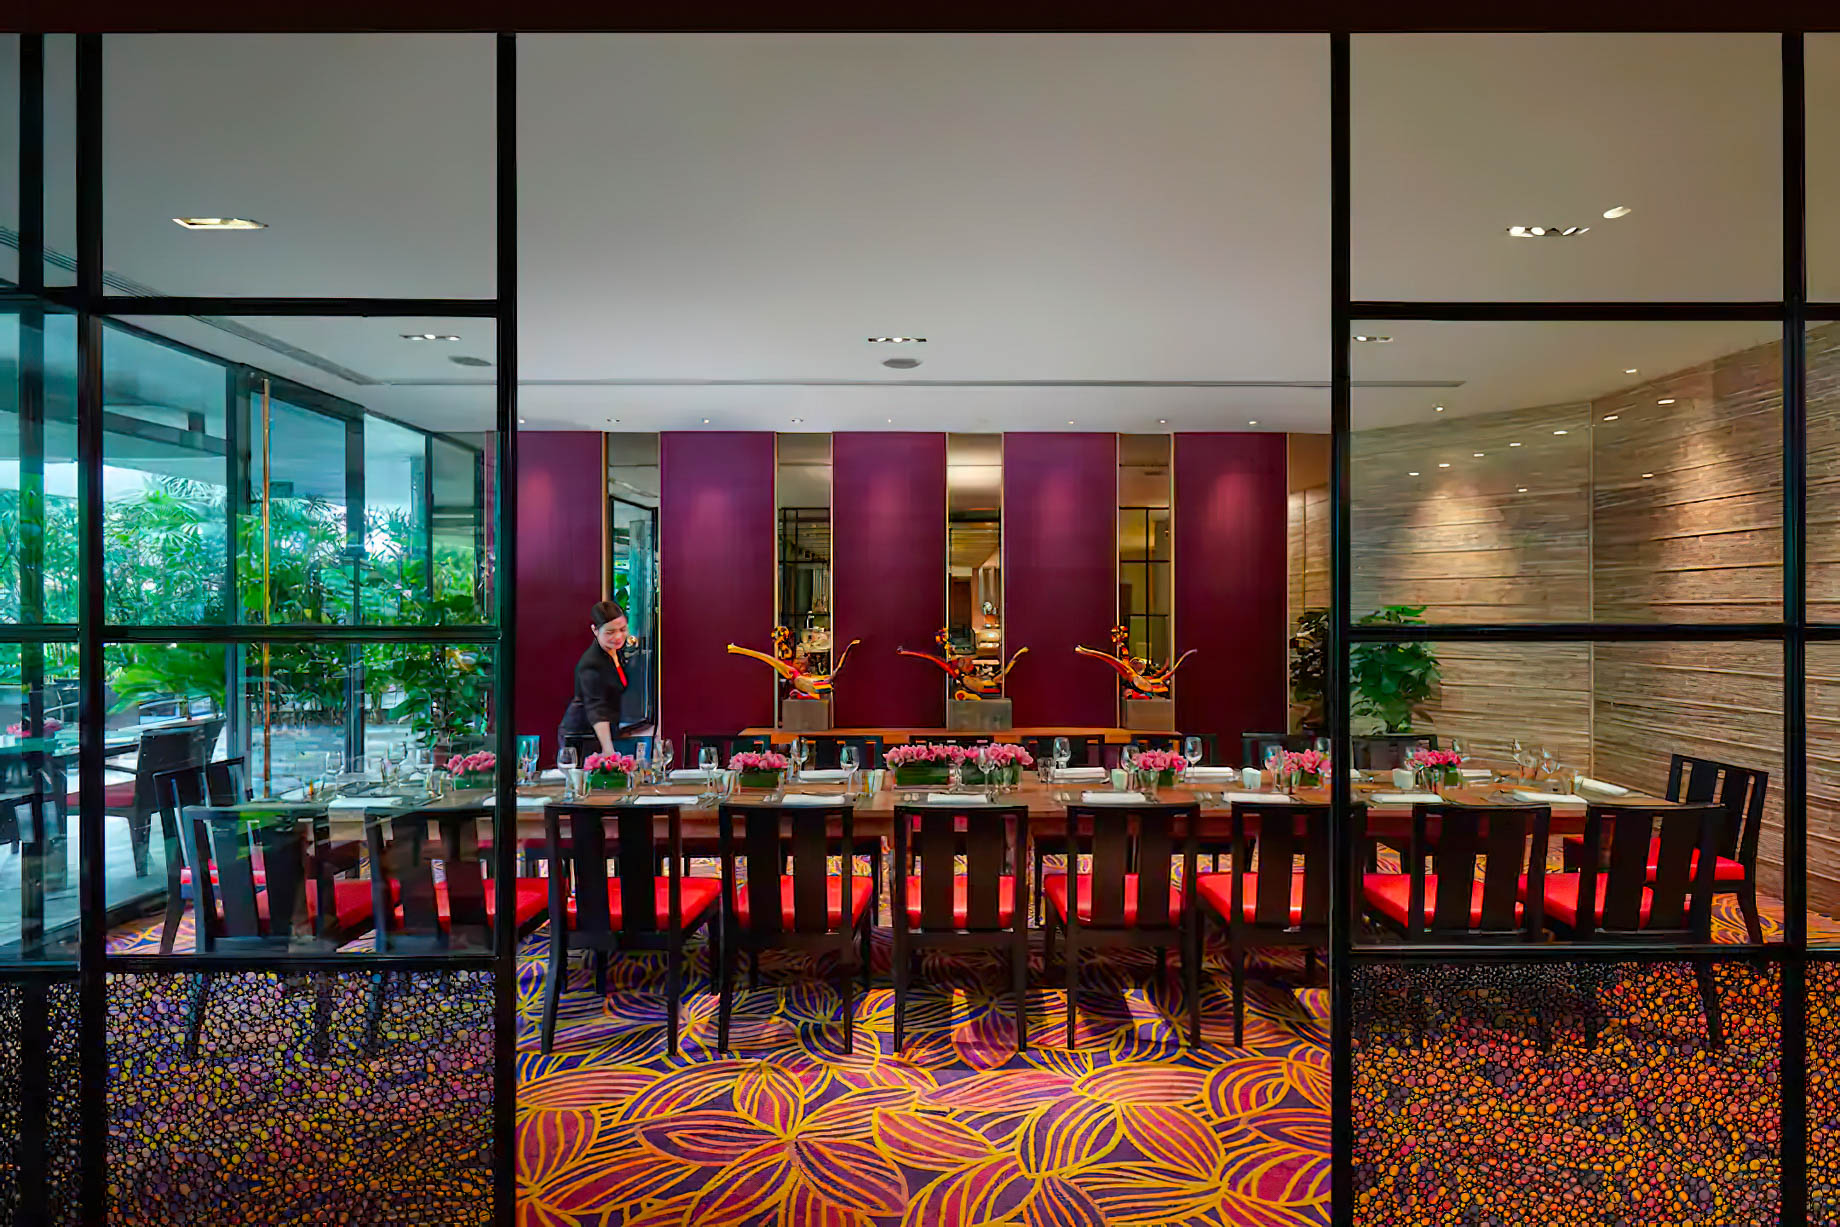 Mandarin Oriental, Singapore Hotel - Singapore - Melt Cafe Private Dining